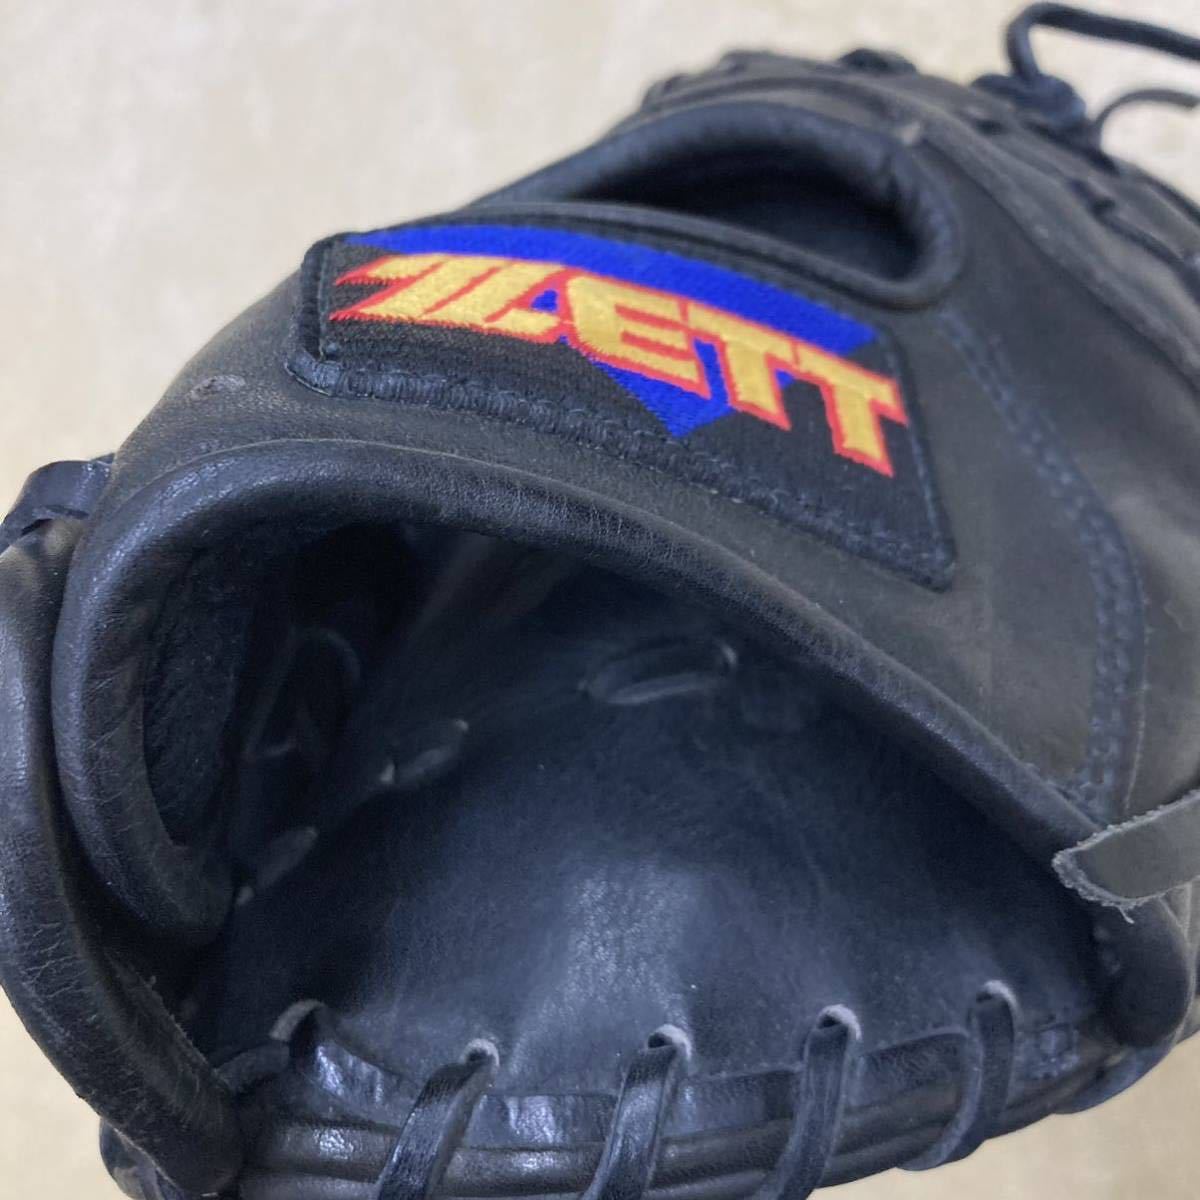 ZETT SLINGER Z First mito glove softball type glove right throwing BRF34813 black black 